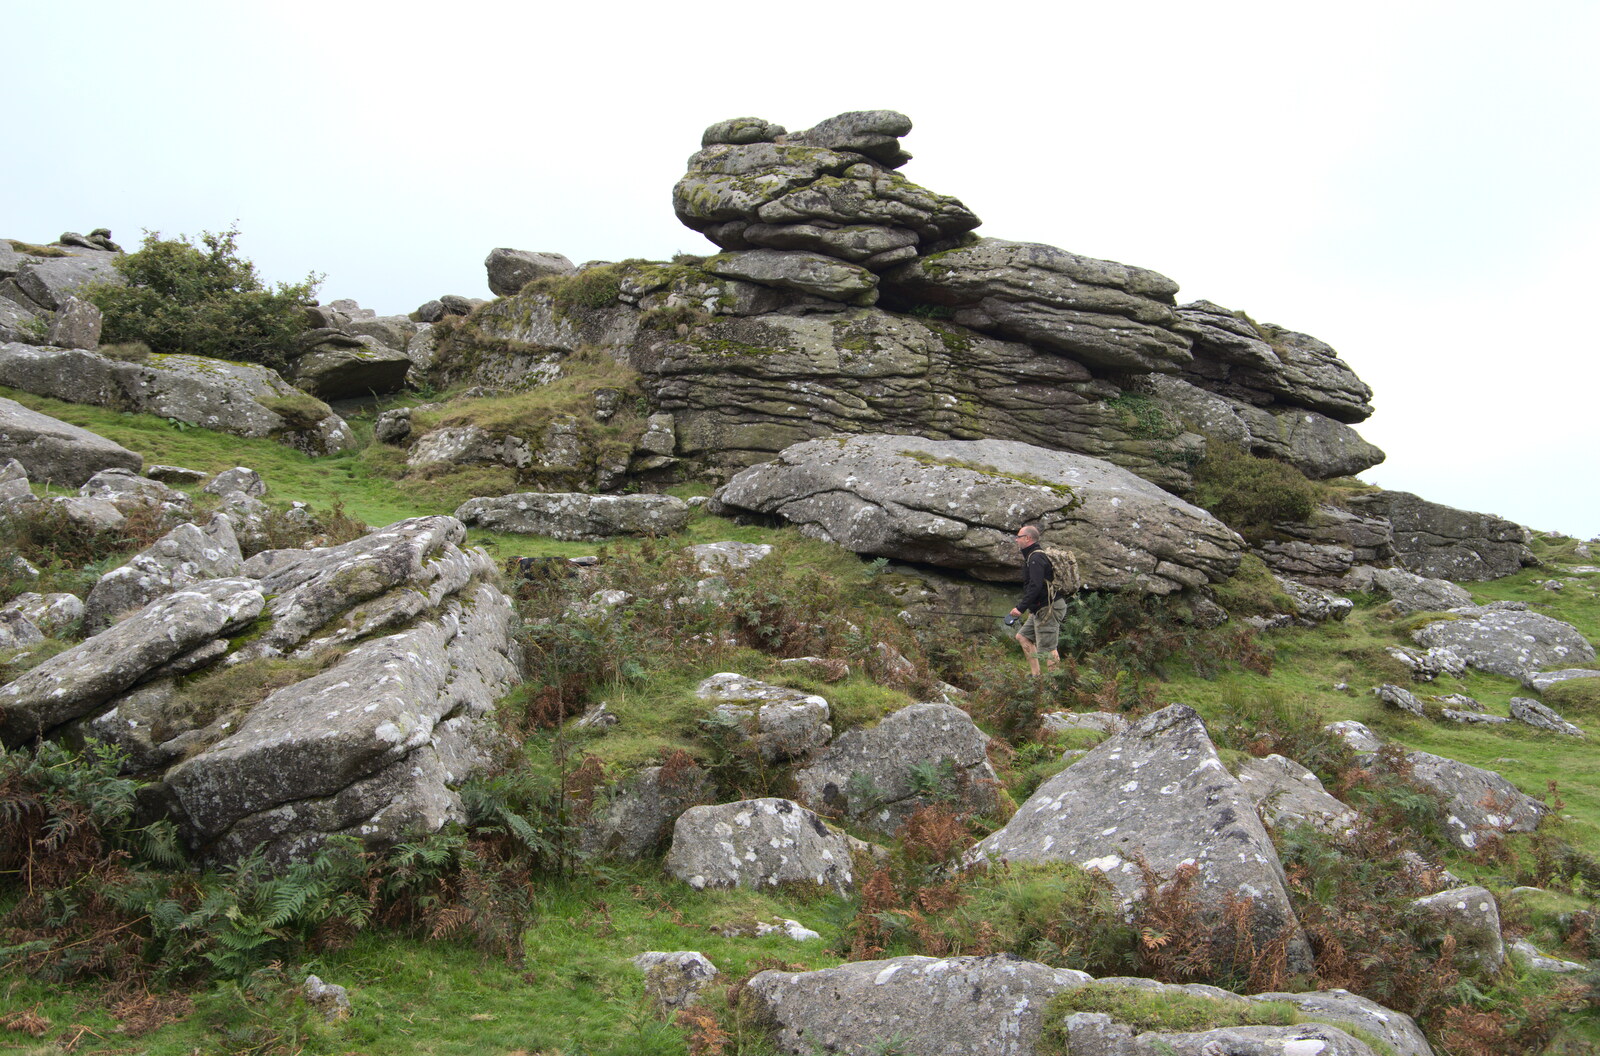 More irregular granite piles from A Walk up Hound Tor, Dartmoor, Devon - 24th August 2020